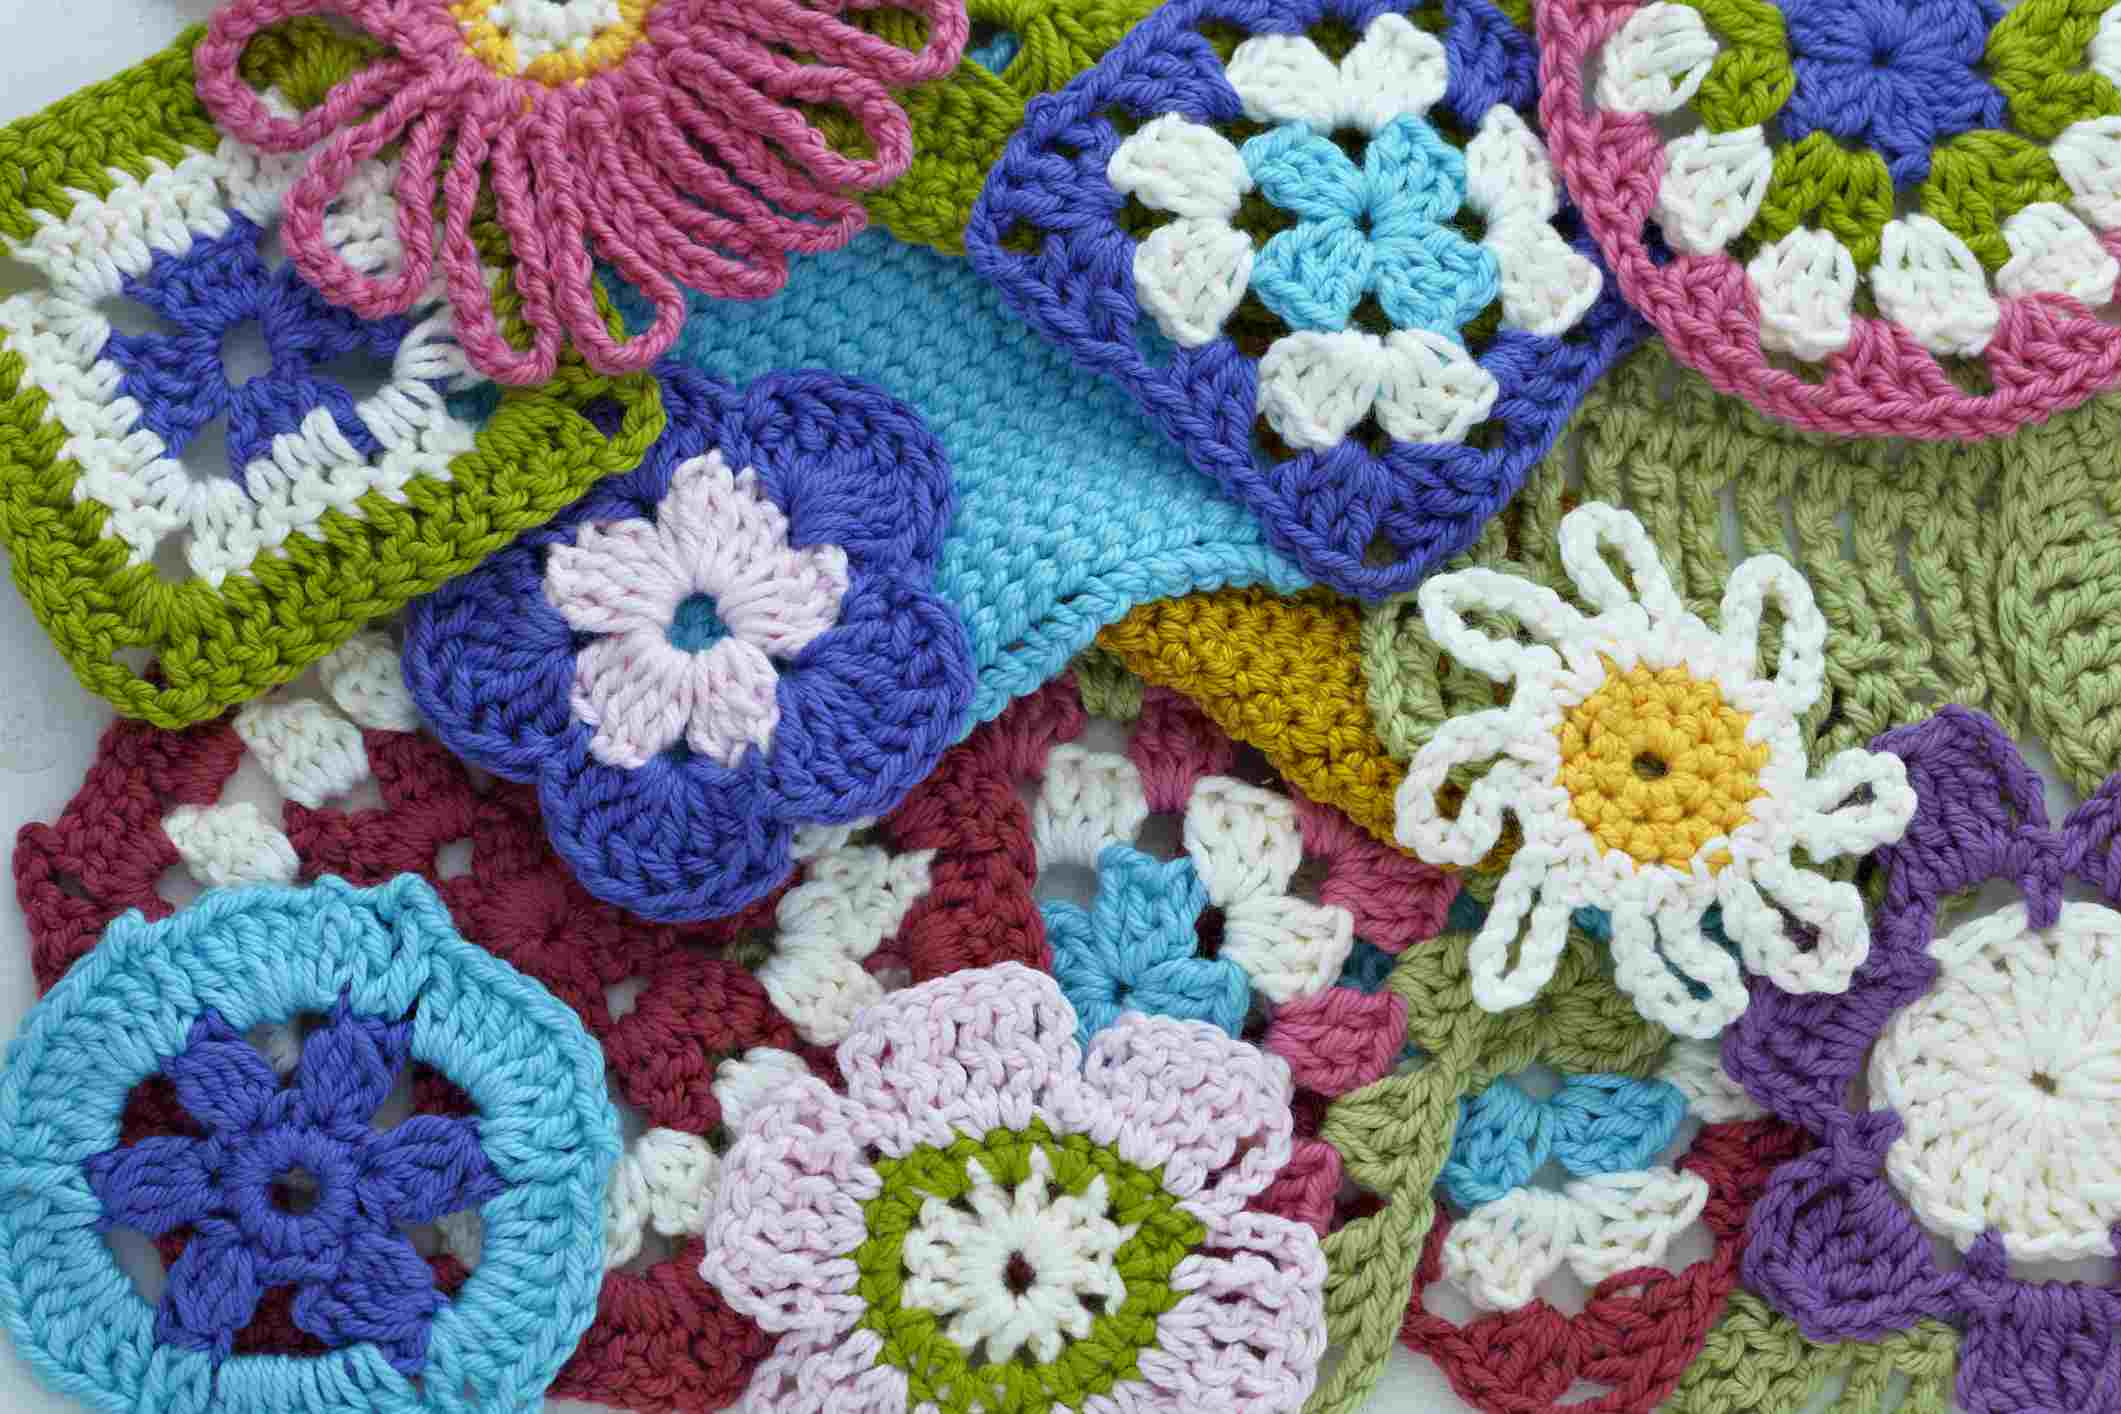 12 Granny Square Crochet Pattern 35 Free Crochet Afghan Square Patterns